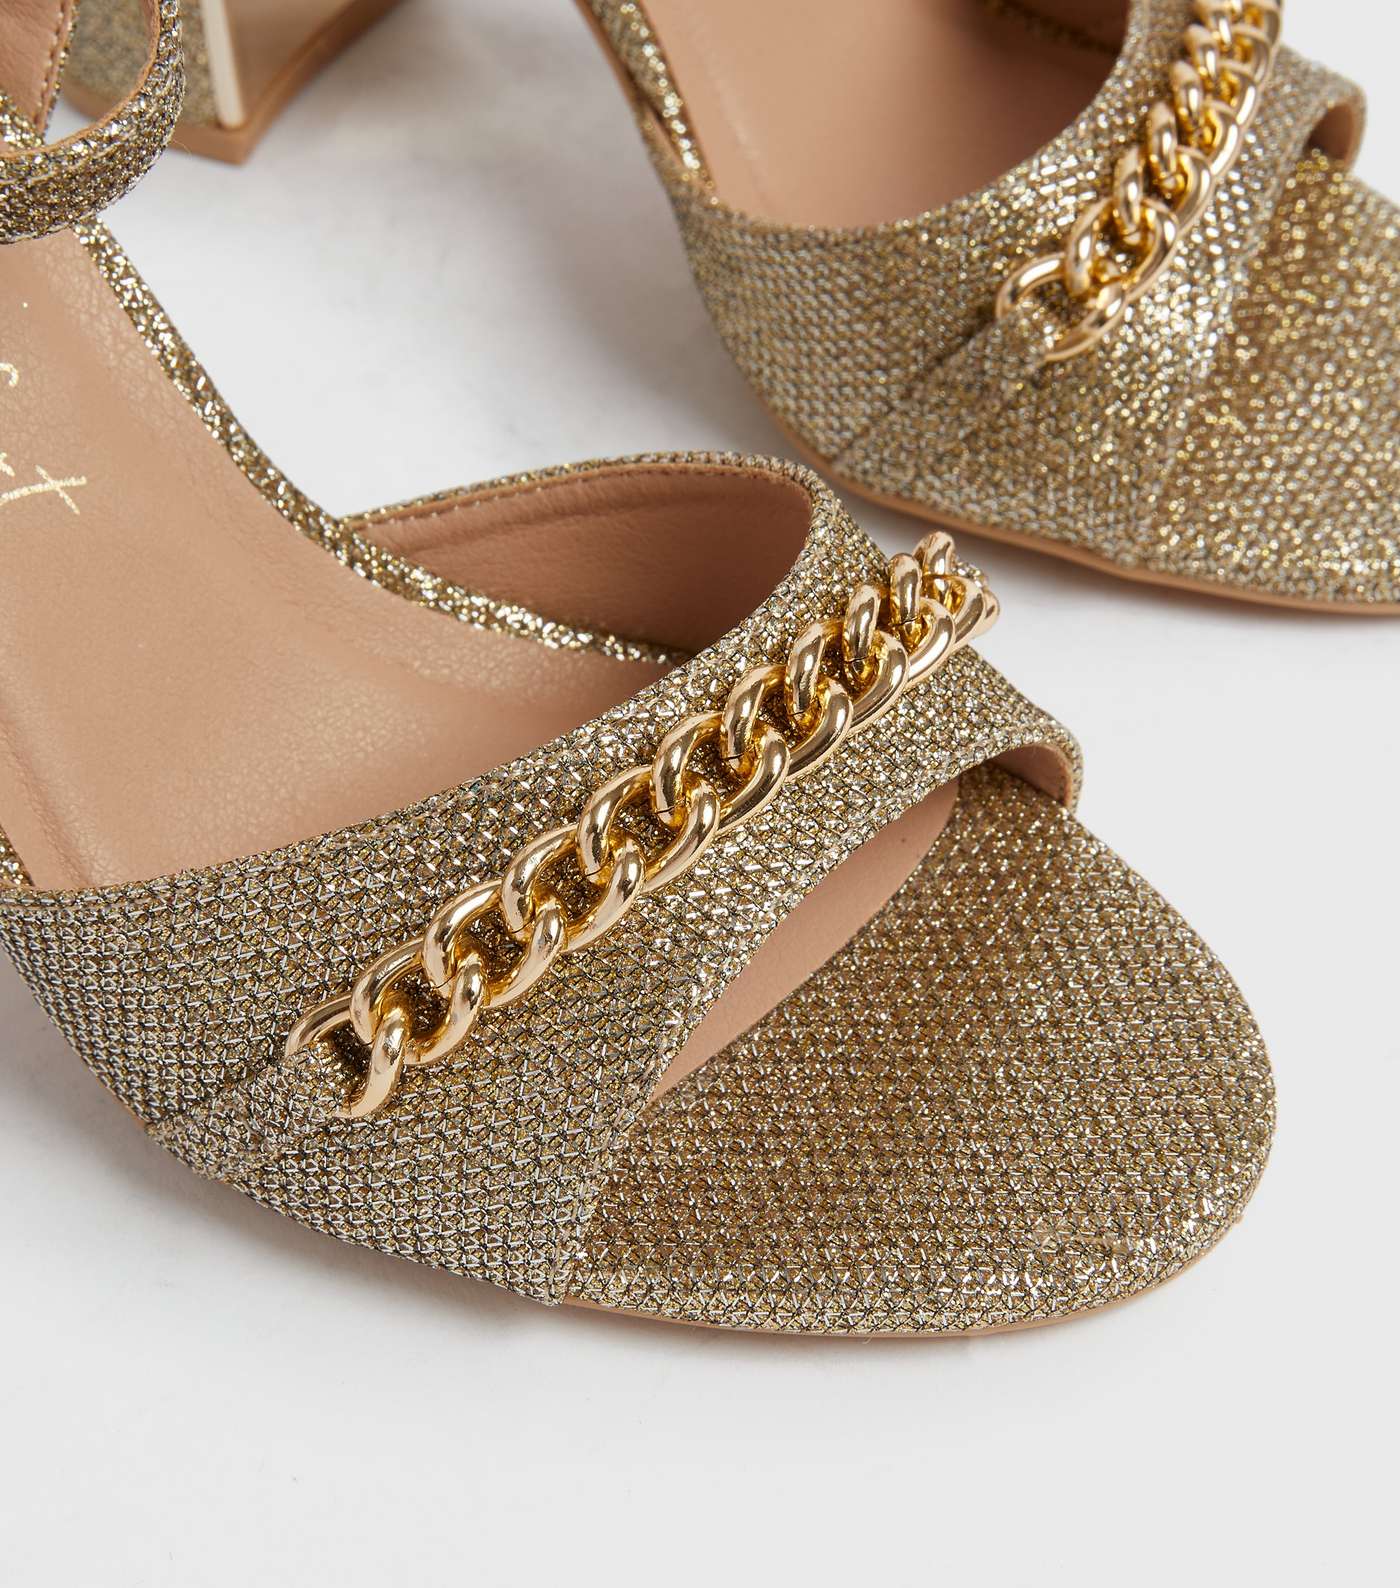 Gold Glitter Chain Trim Block Heel Sandals Image 4